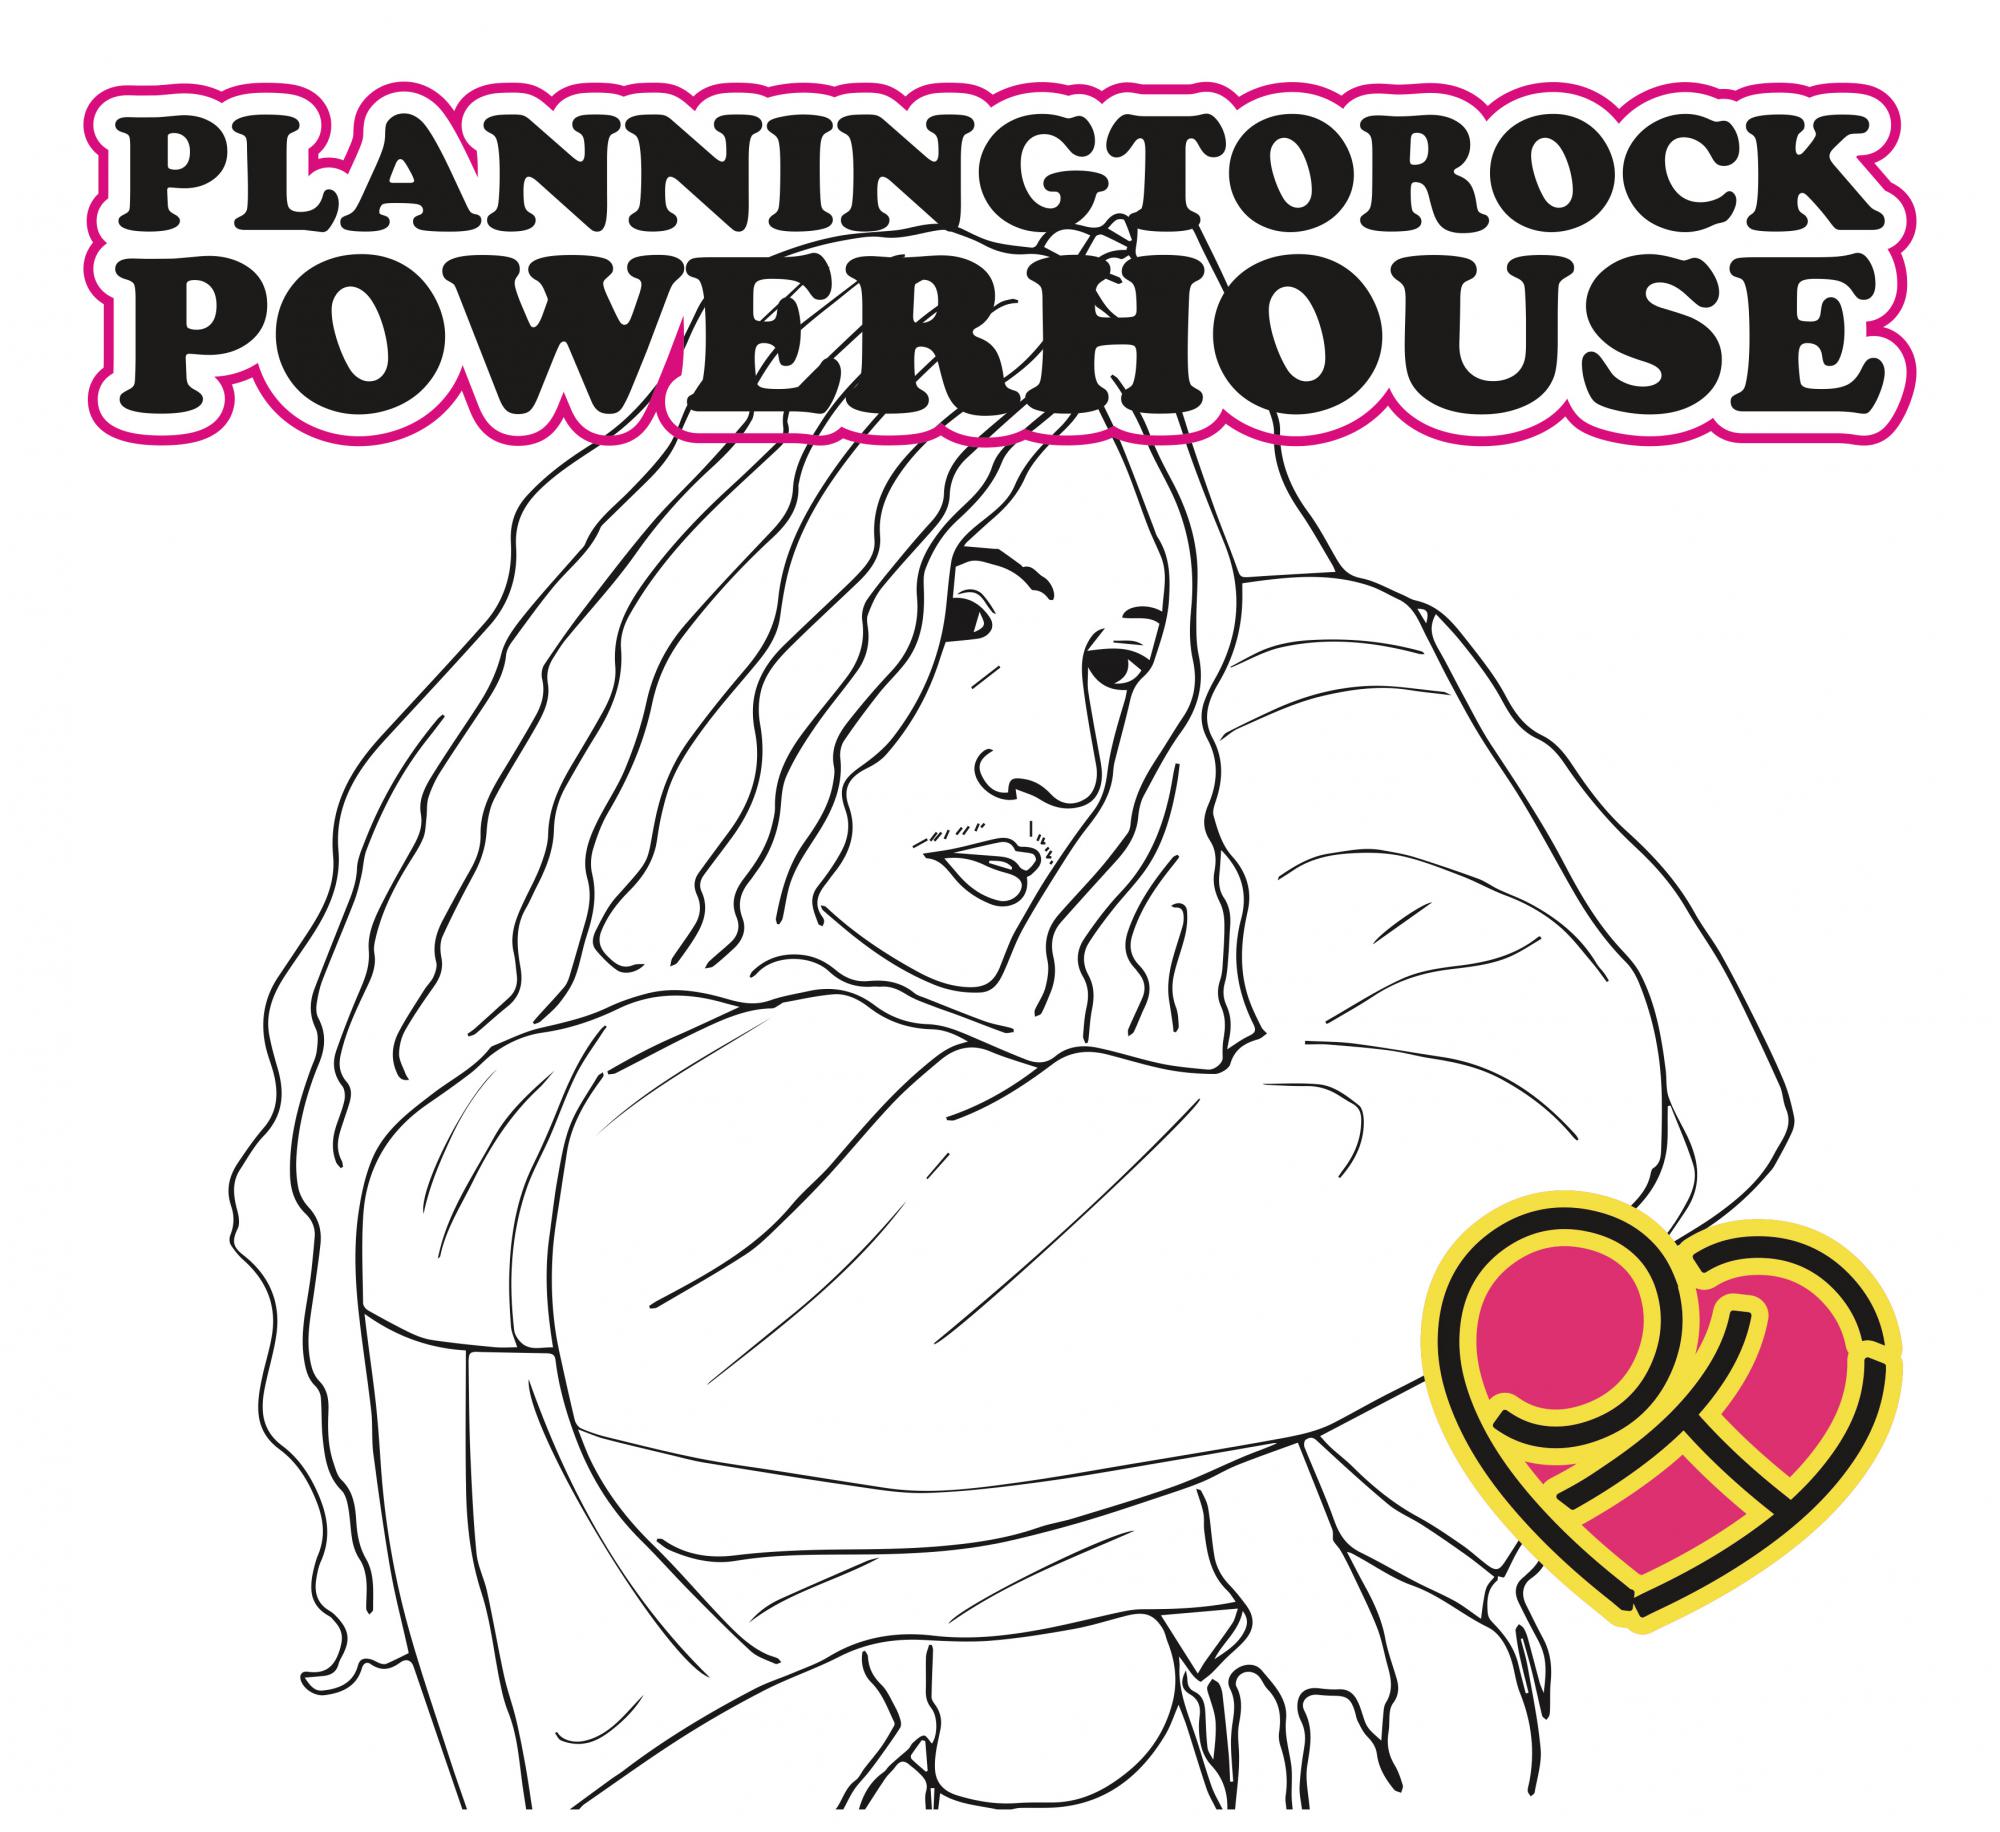 19_planningtorock_powerhousecplanningtorockpresse.jpg